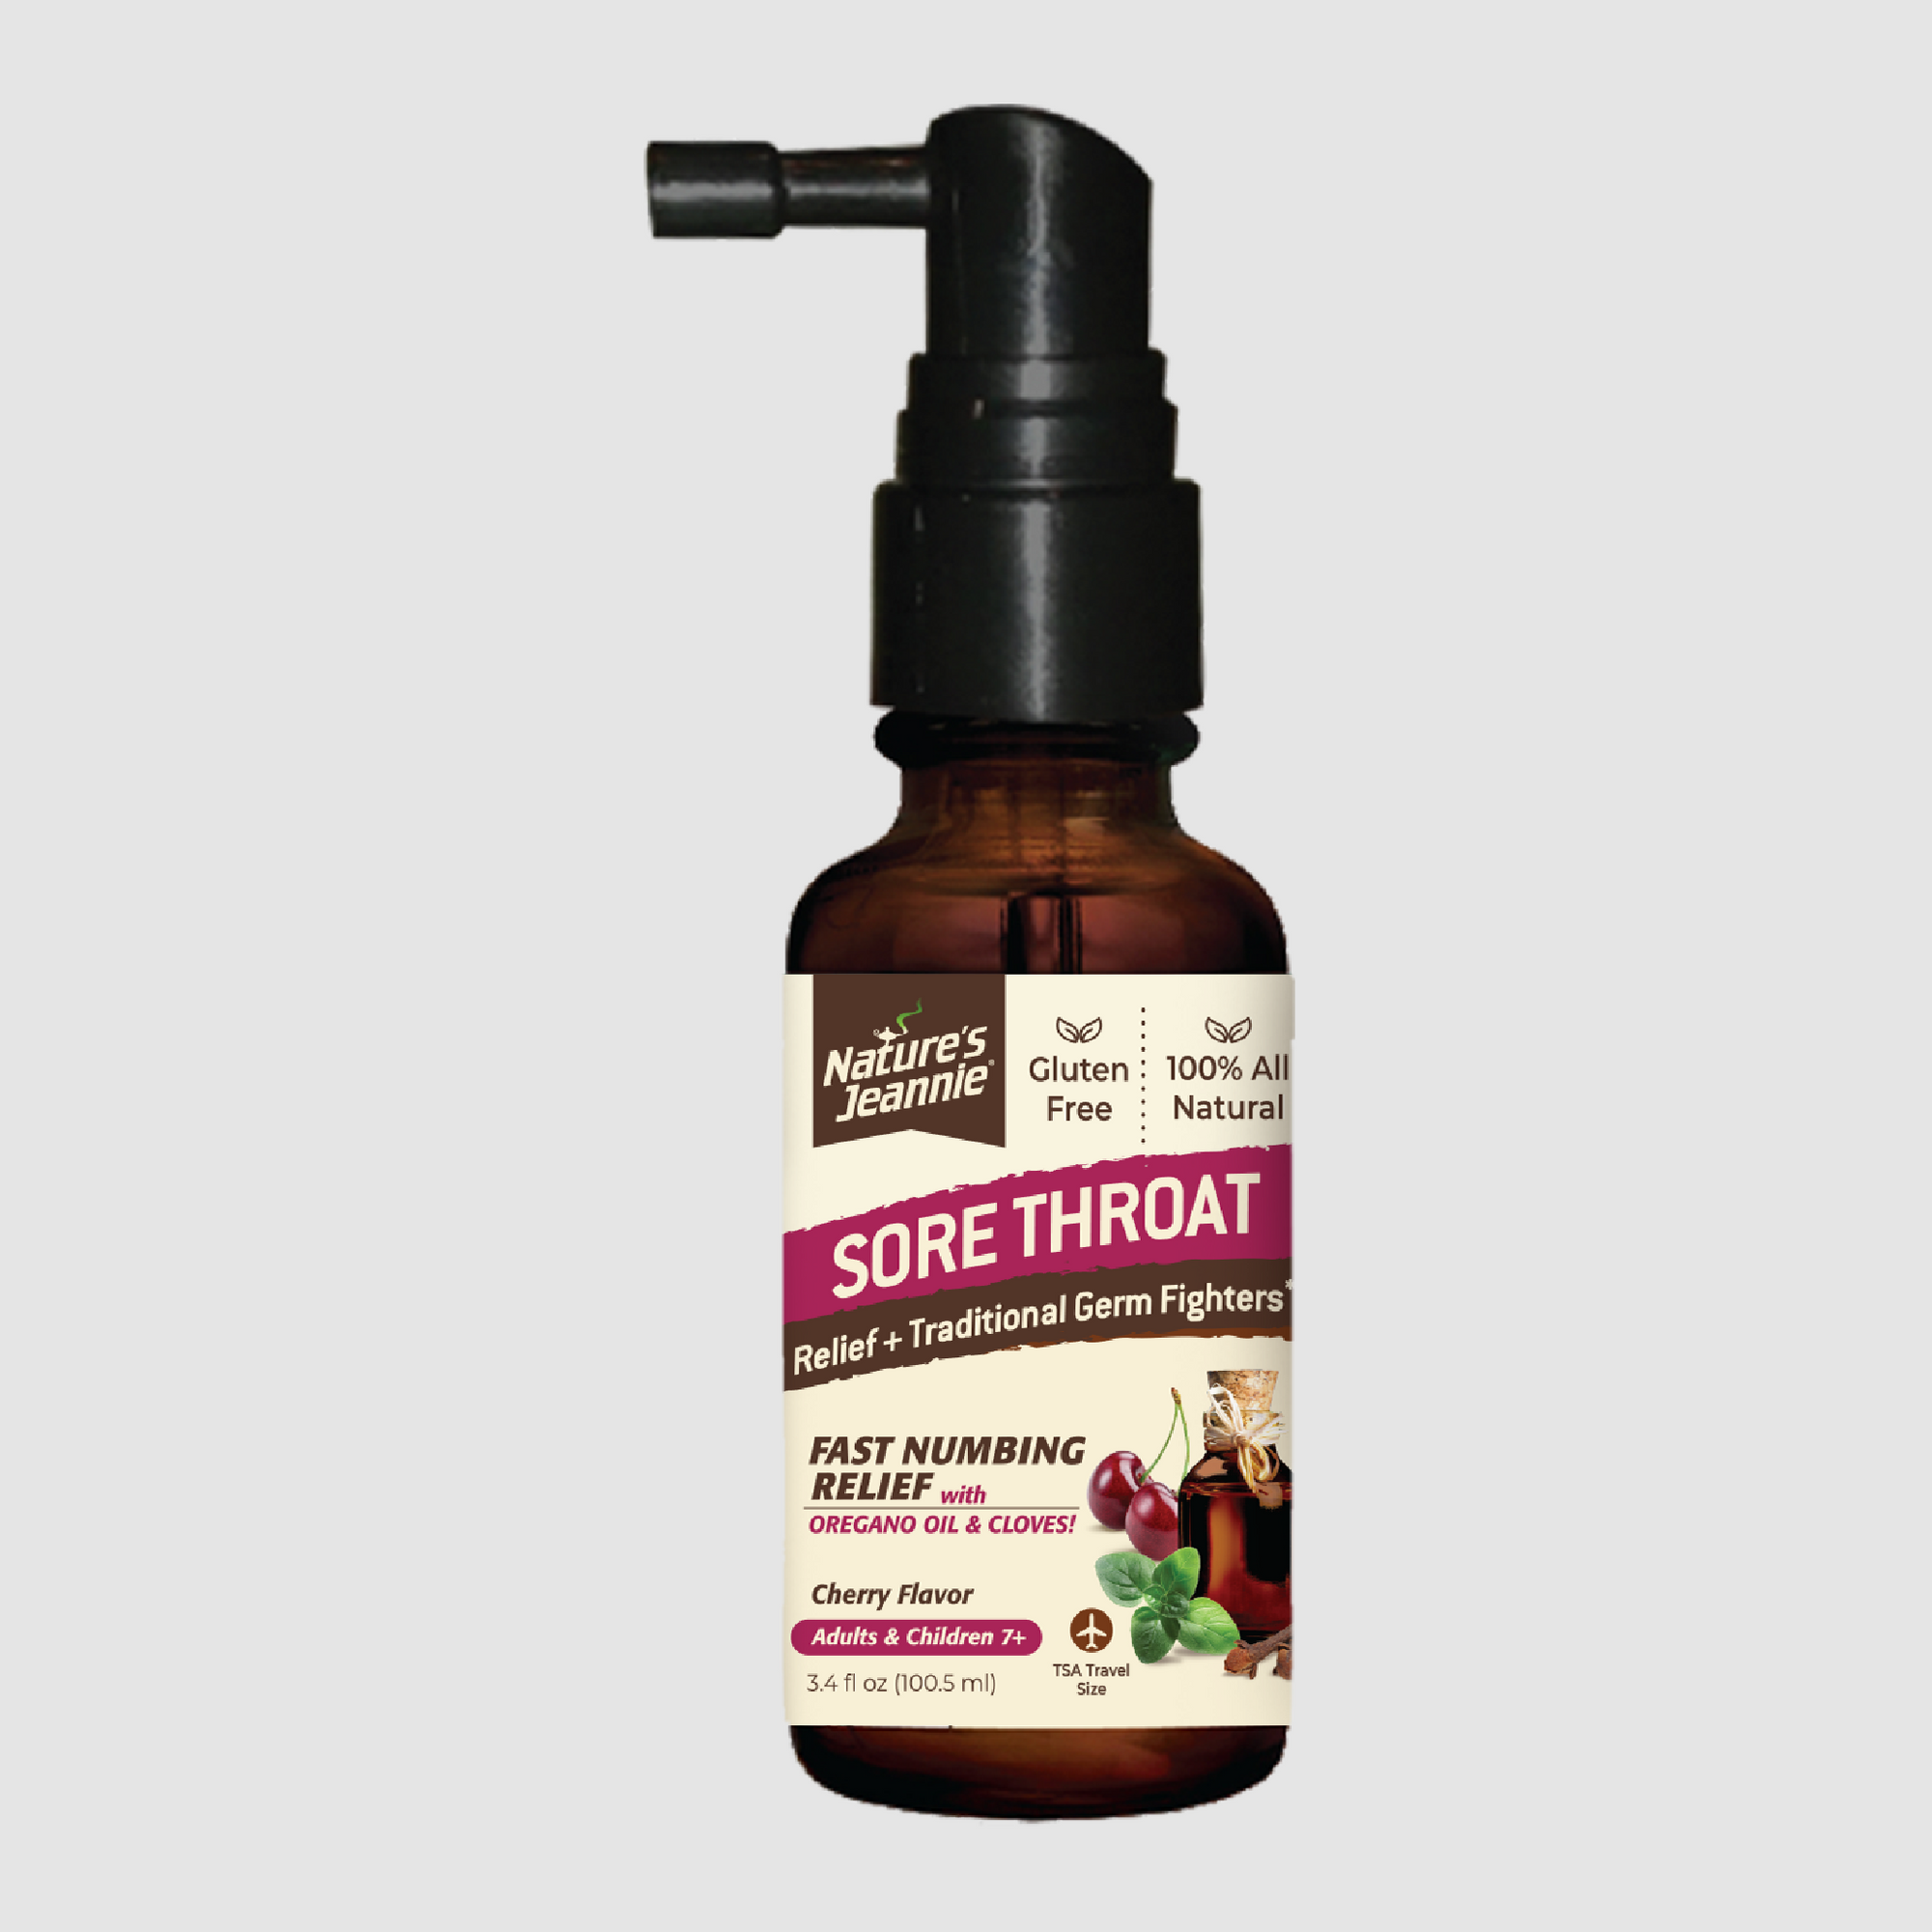 Nature's Jeannie Sore Throat Relief Spray bottle, TSA travel size